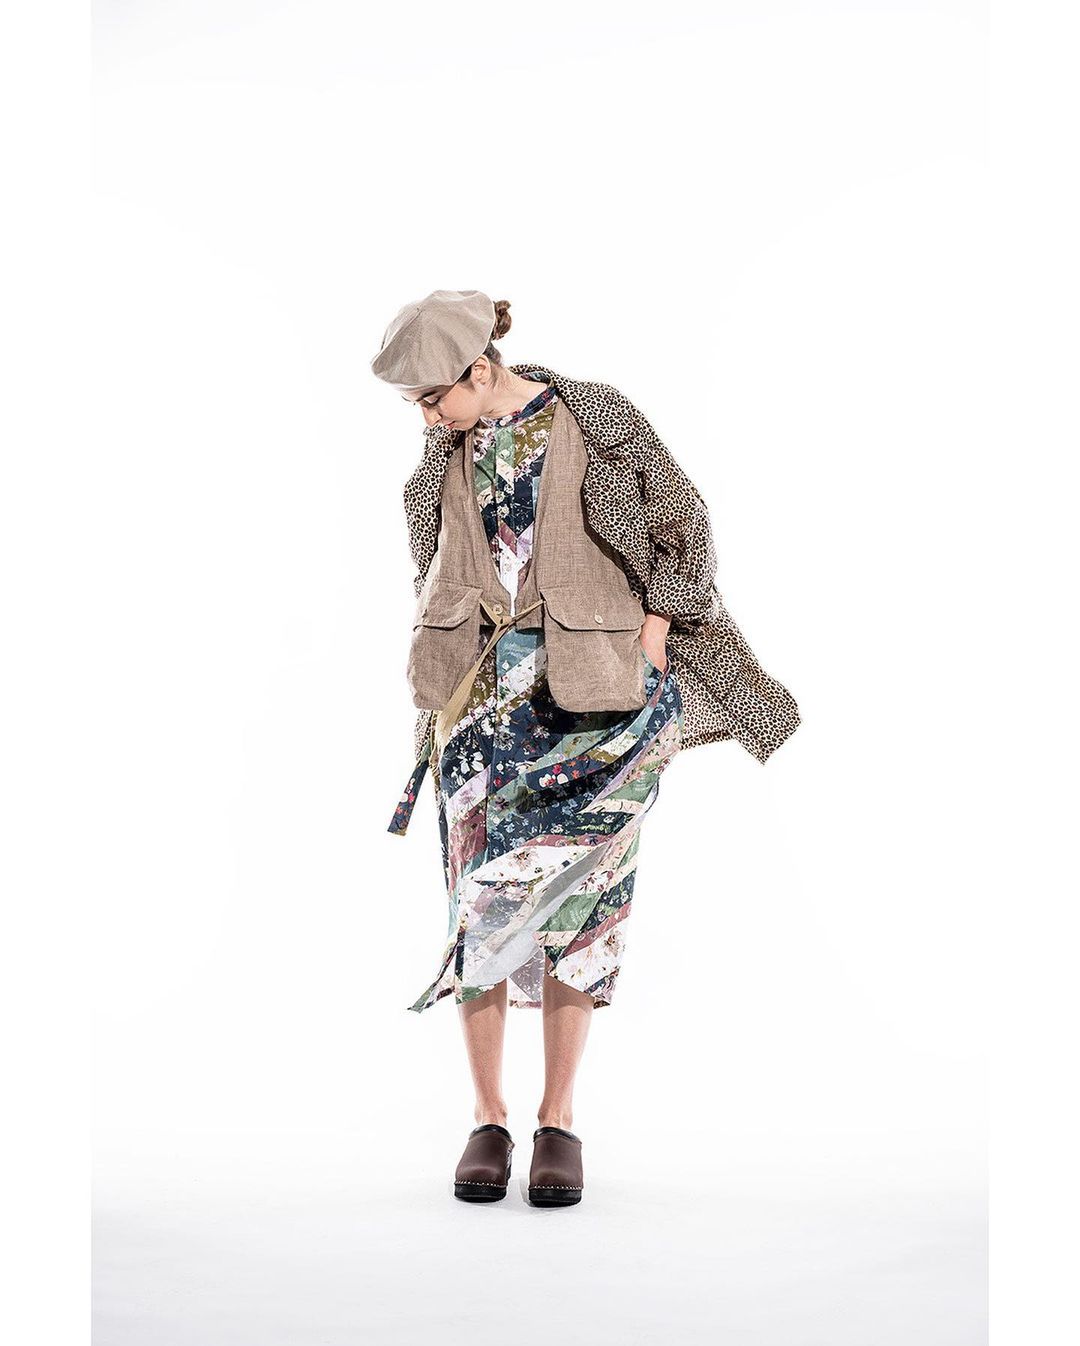 Style and function blend effortlessly with ® Flora Mini Shoulder Bag